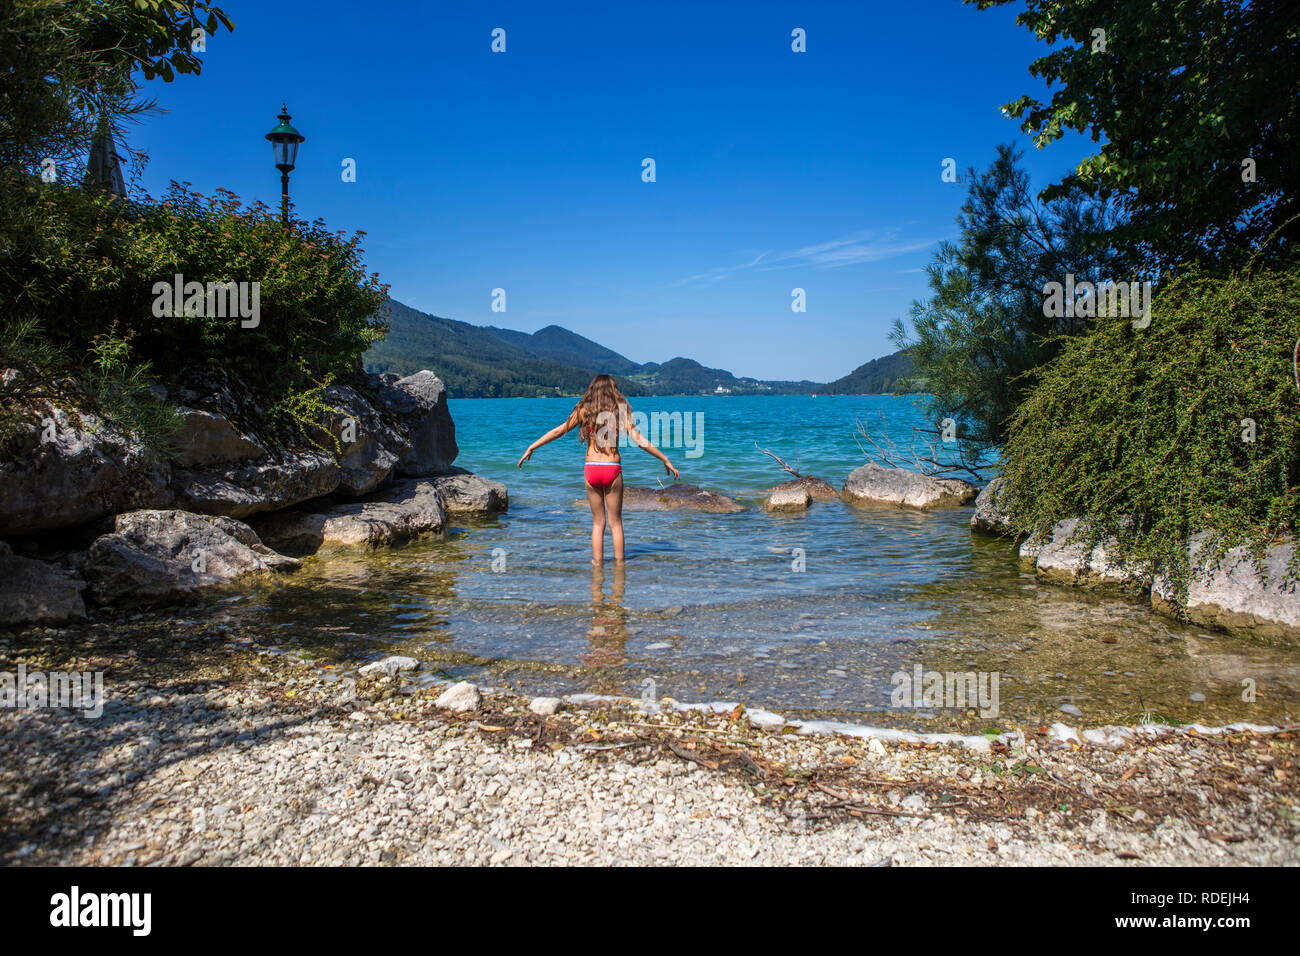 Young girl walking in the lake in Austria at Lake Wolfgang Stock Photo